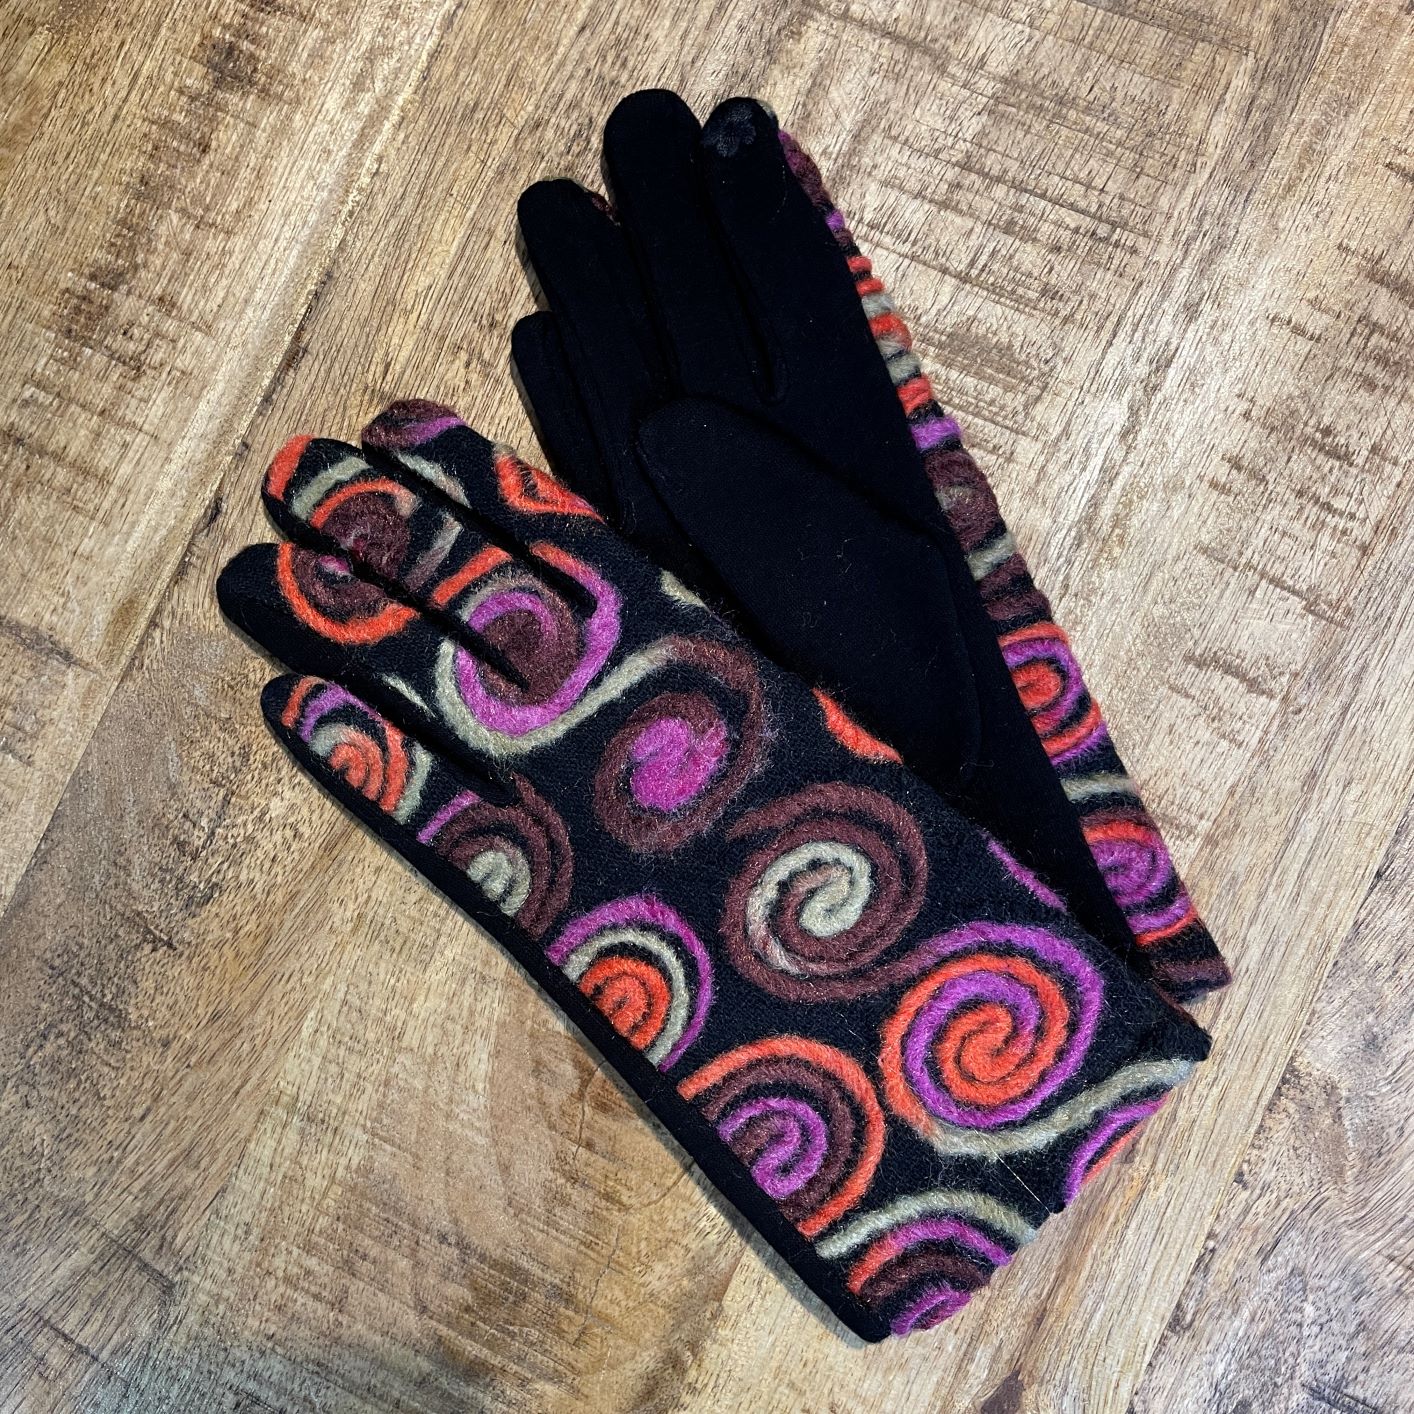 Spiral Yarn Gloves or